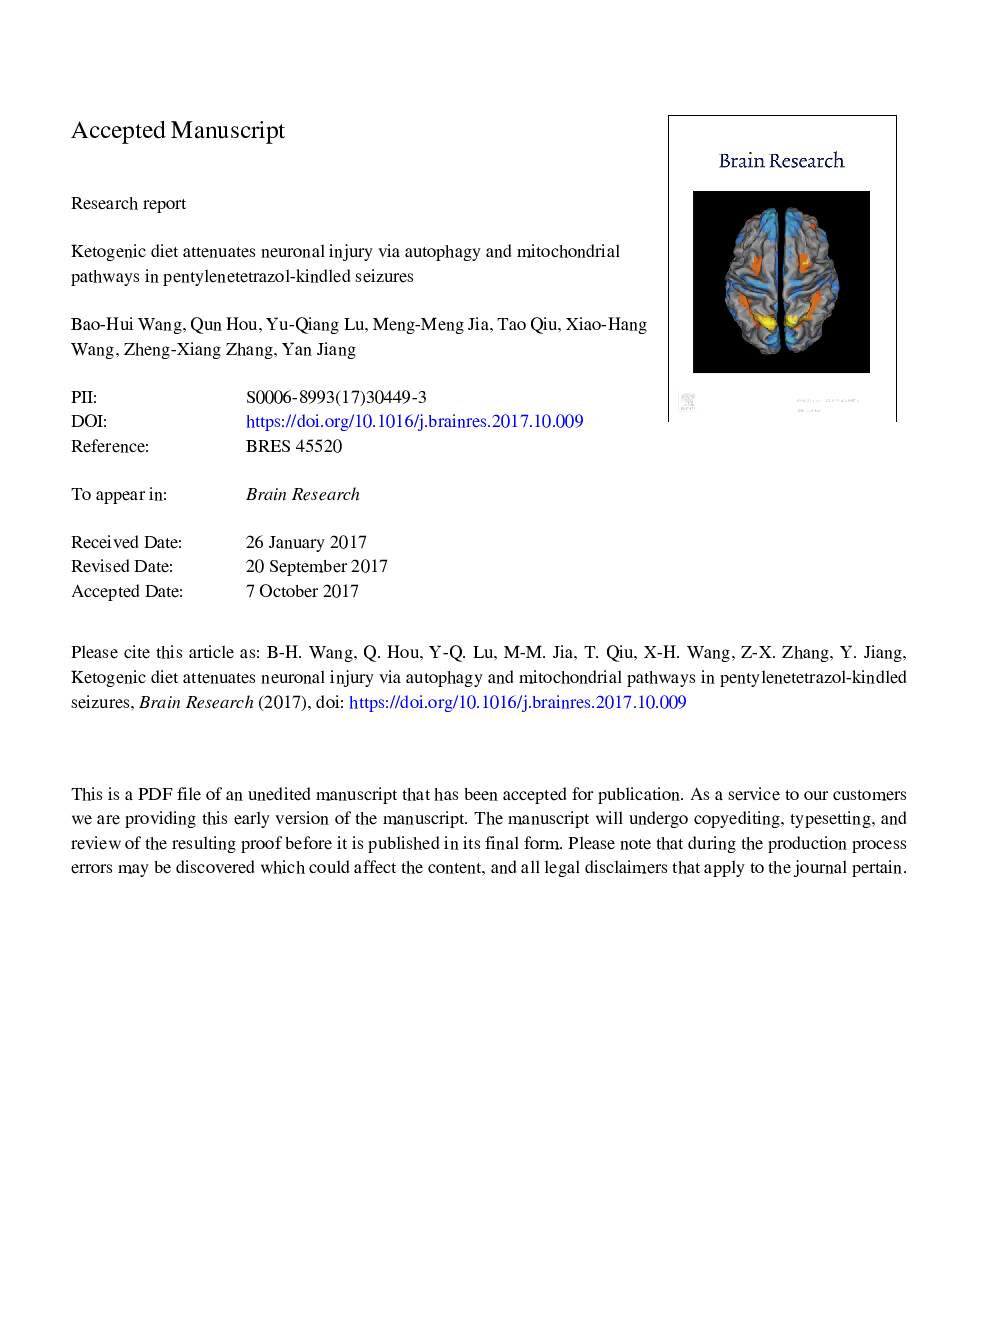 Ketogenic diet attenuates neuronal injury via autophagy and mitochondrial pathways in pentylenetetrazol-kindled seizures